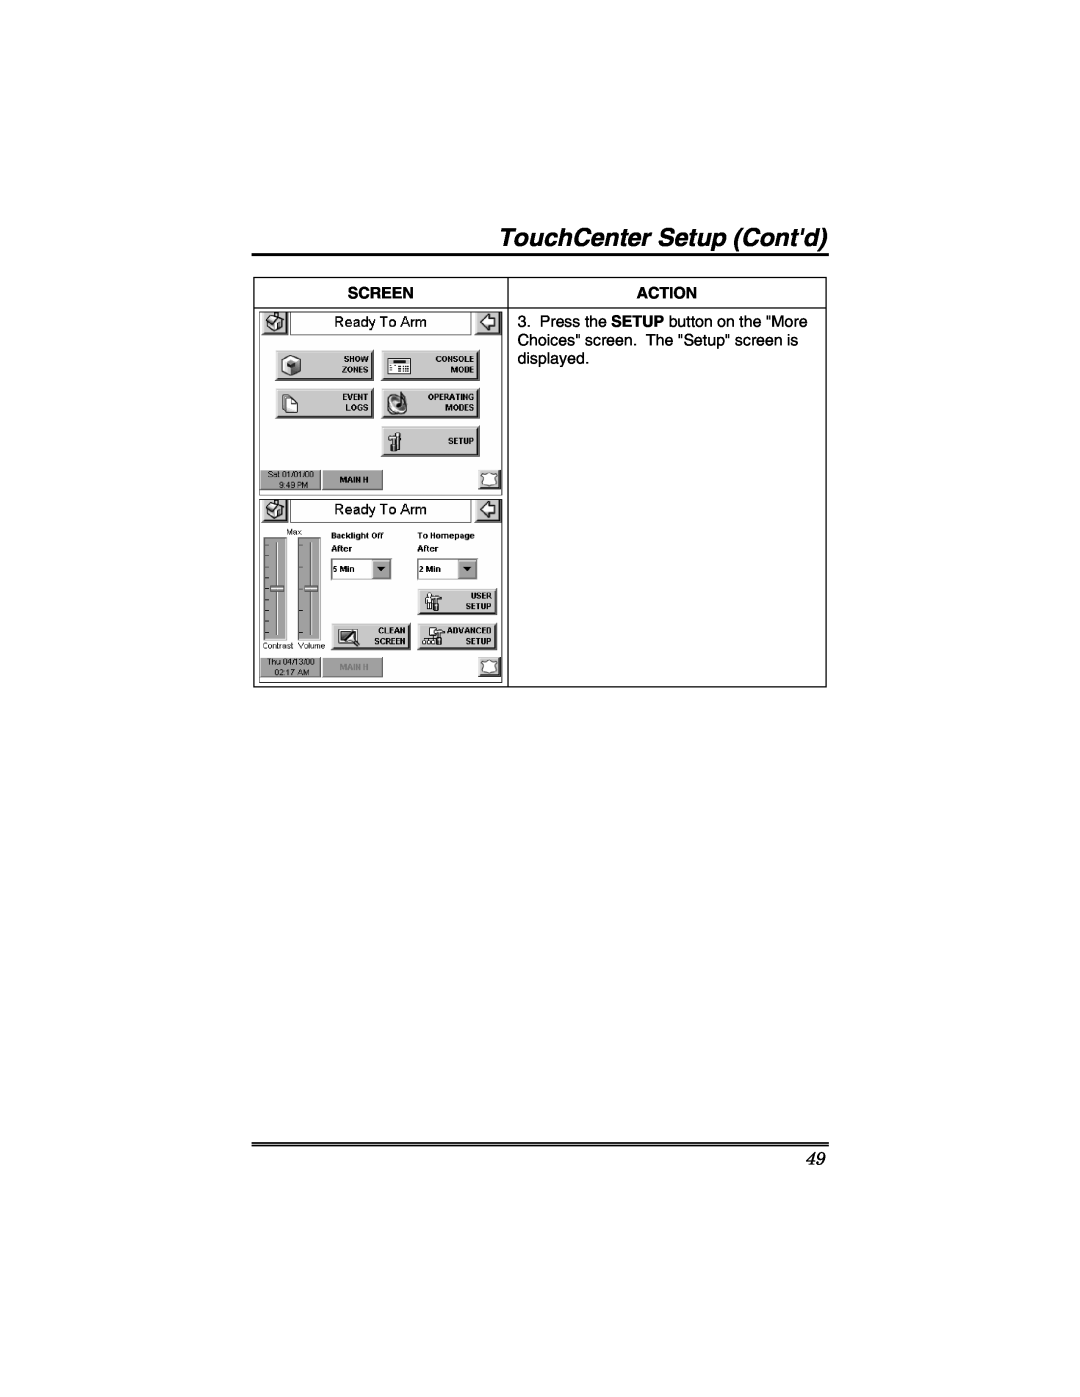 Honeywell 6271V manual TouchCenter Setup Contd, Screen, Action 